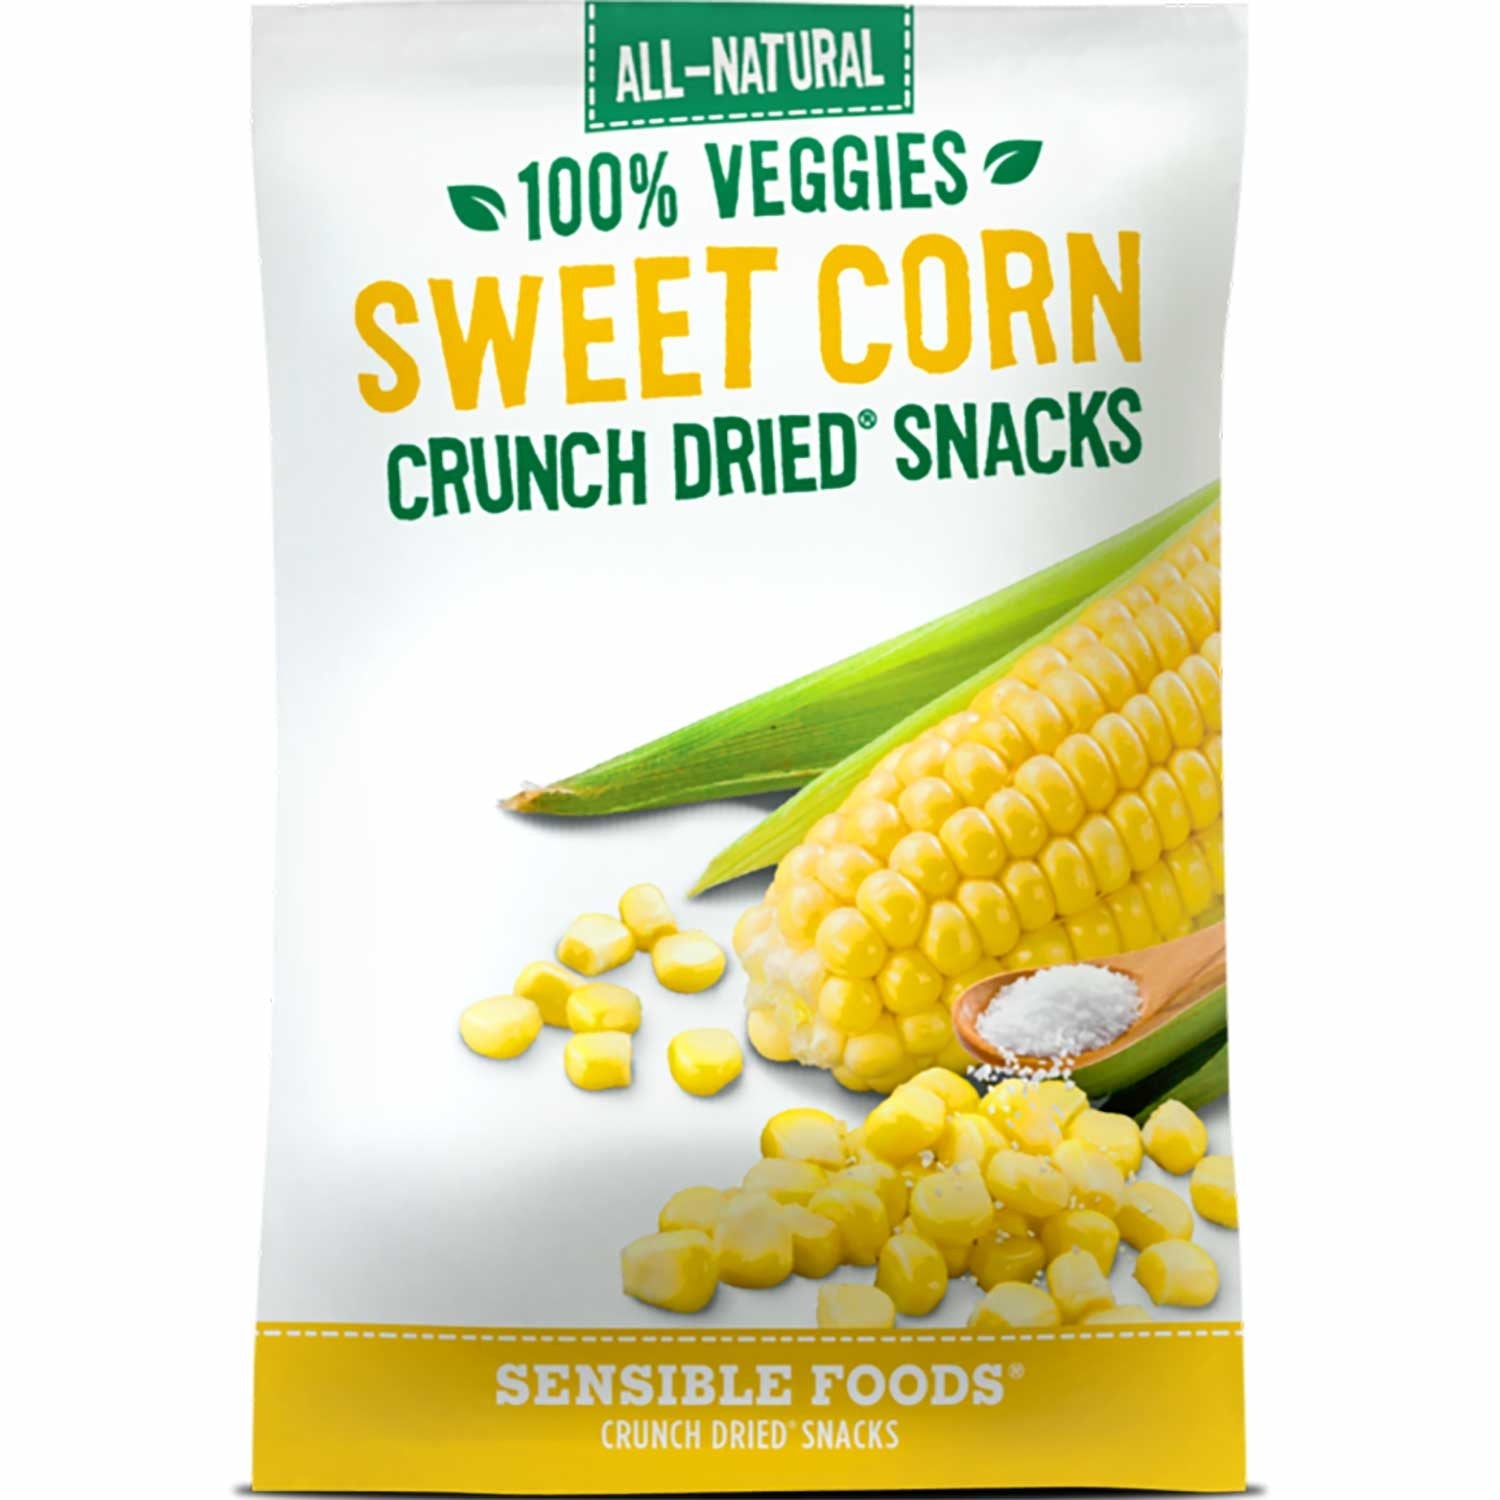 Sensible Foods All-Natural 100% Veggies Sweet Corn Crunch Dried Snack, 12g.-NaturesWisdom